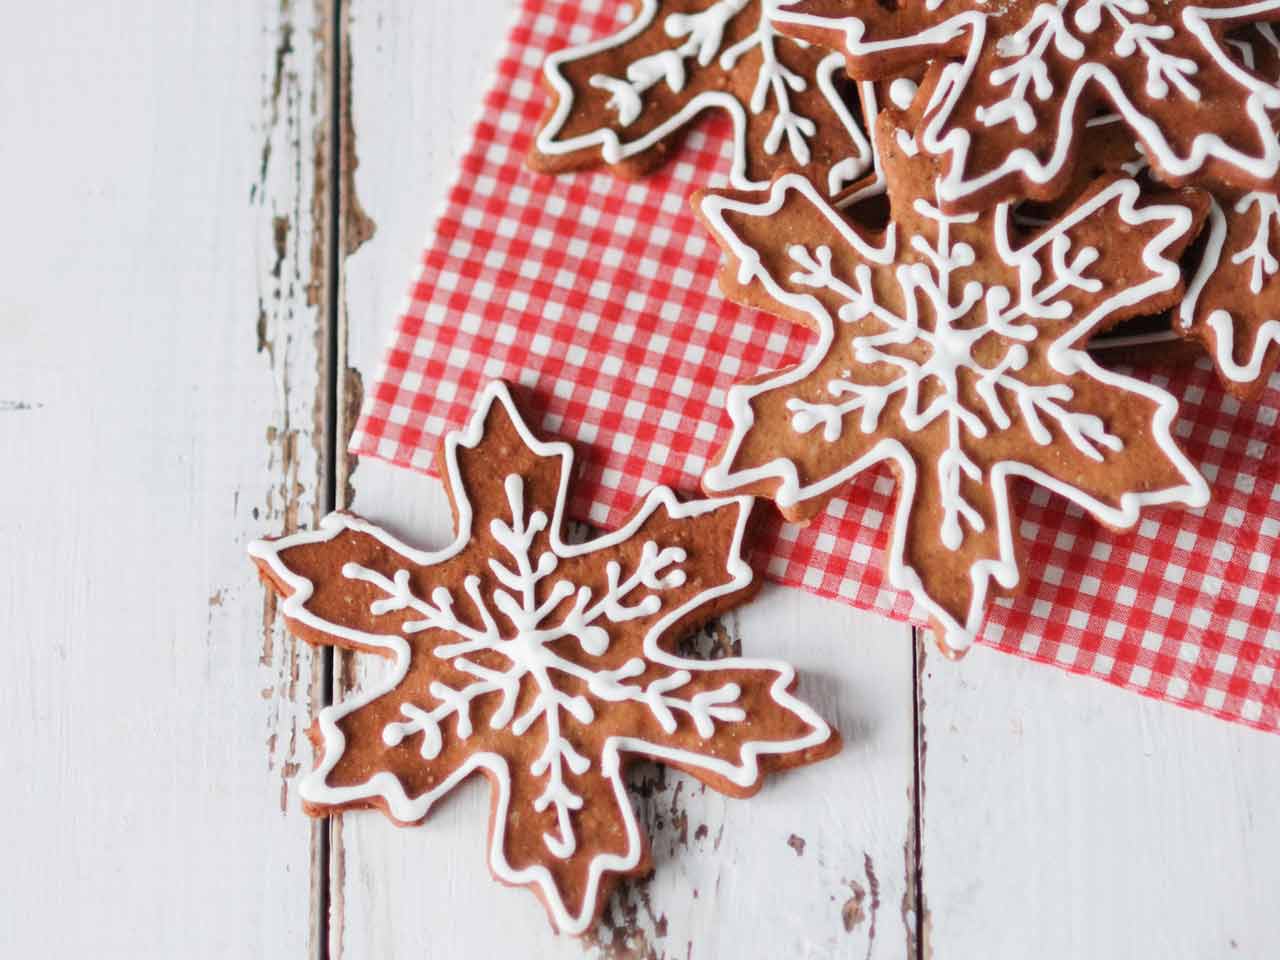 Pepparkakor, Scandinavian spiced Christmas biscuits